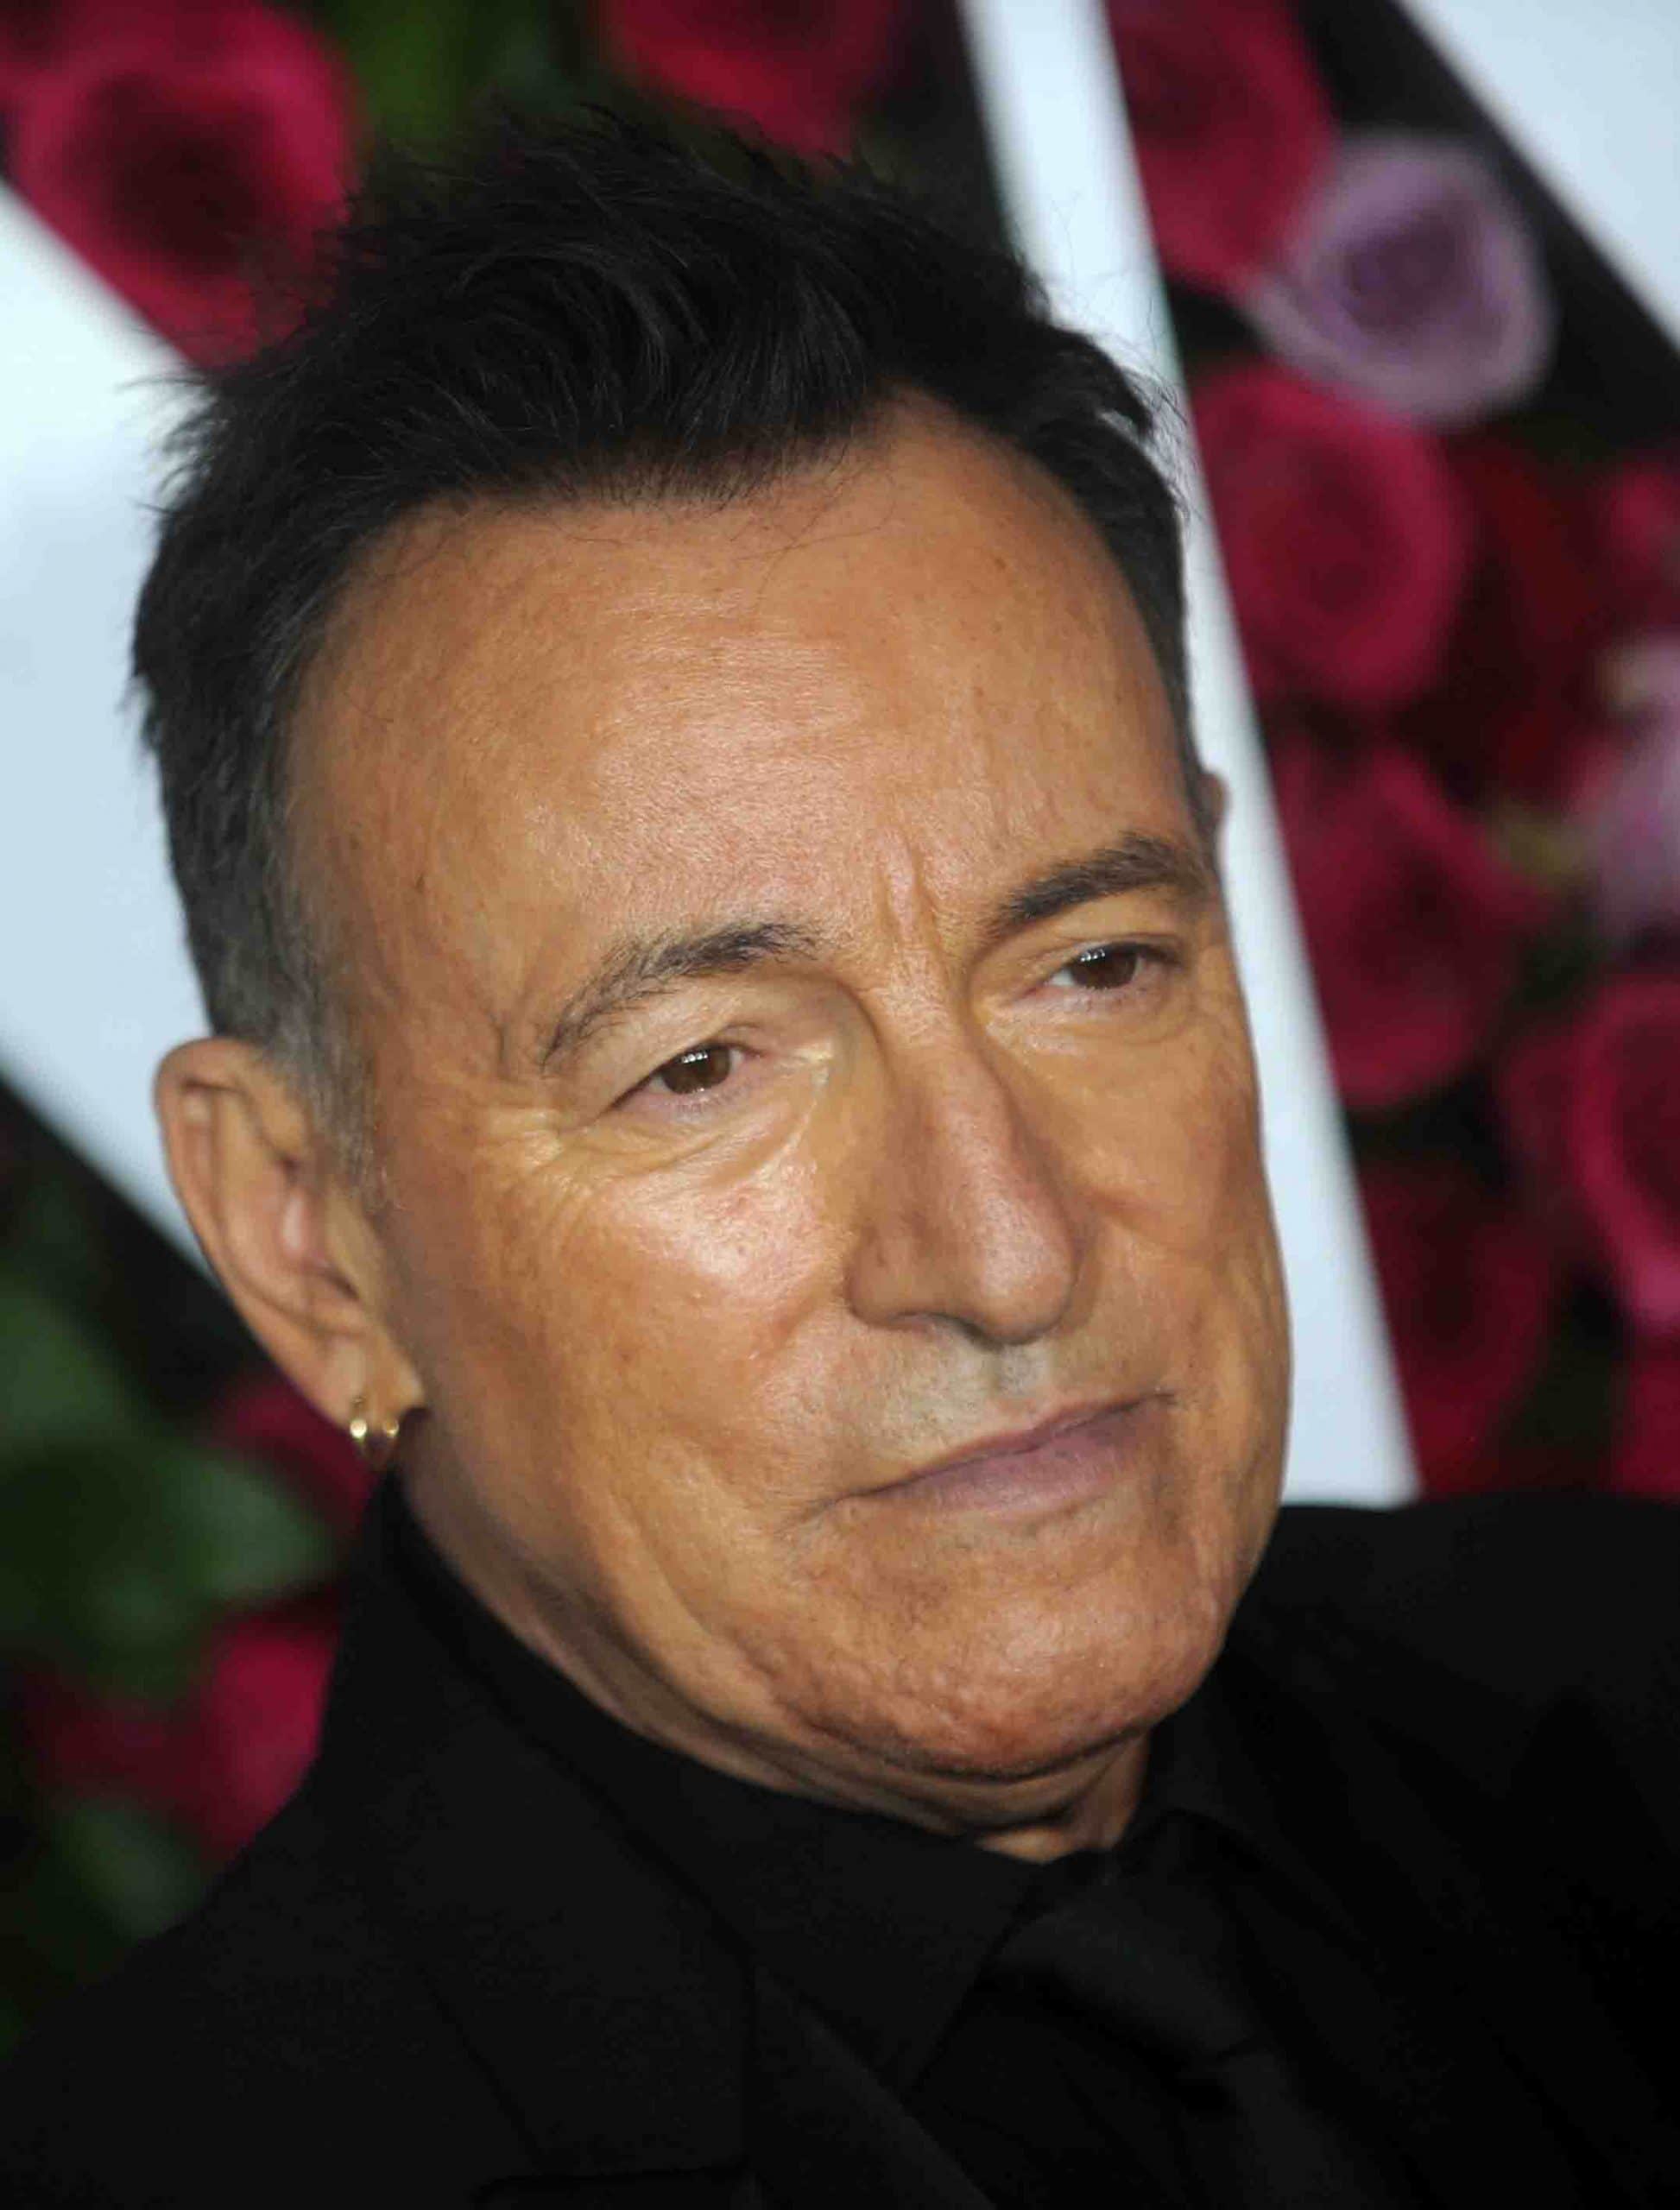 Bruce Springsteen Headed To Court Following DWI Arrest